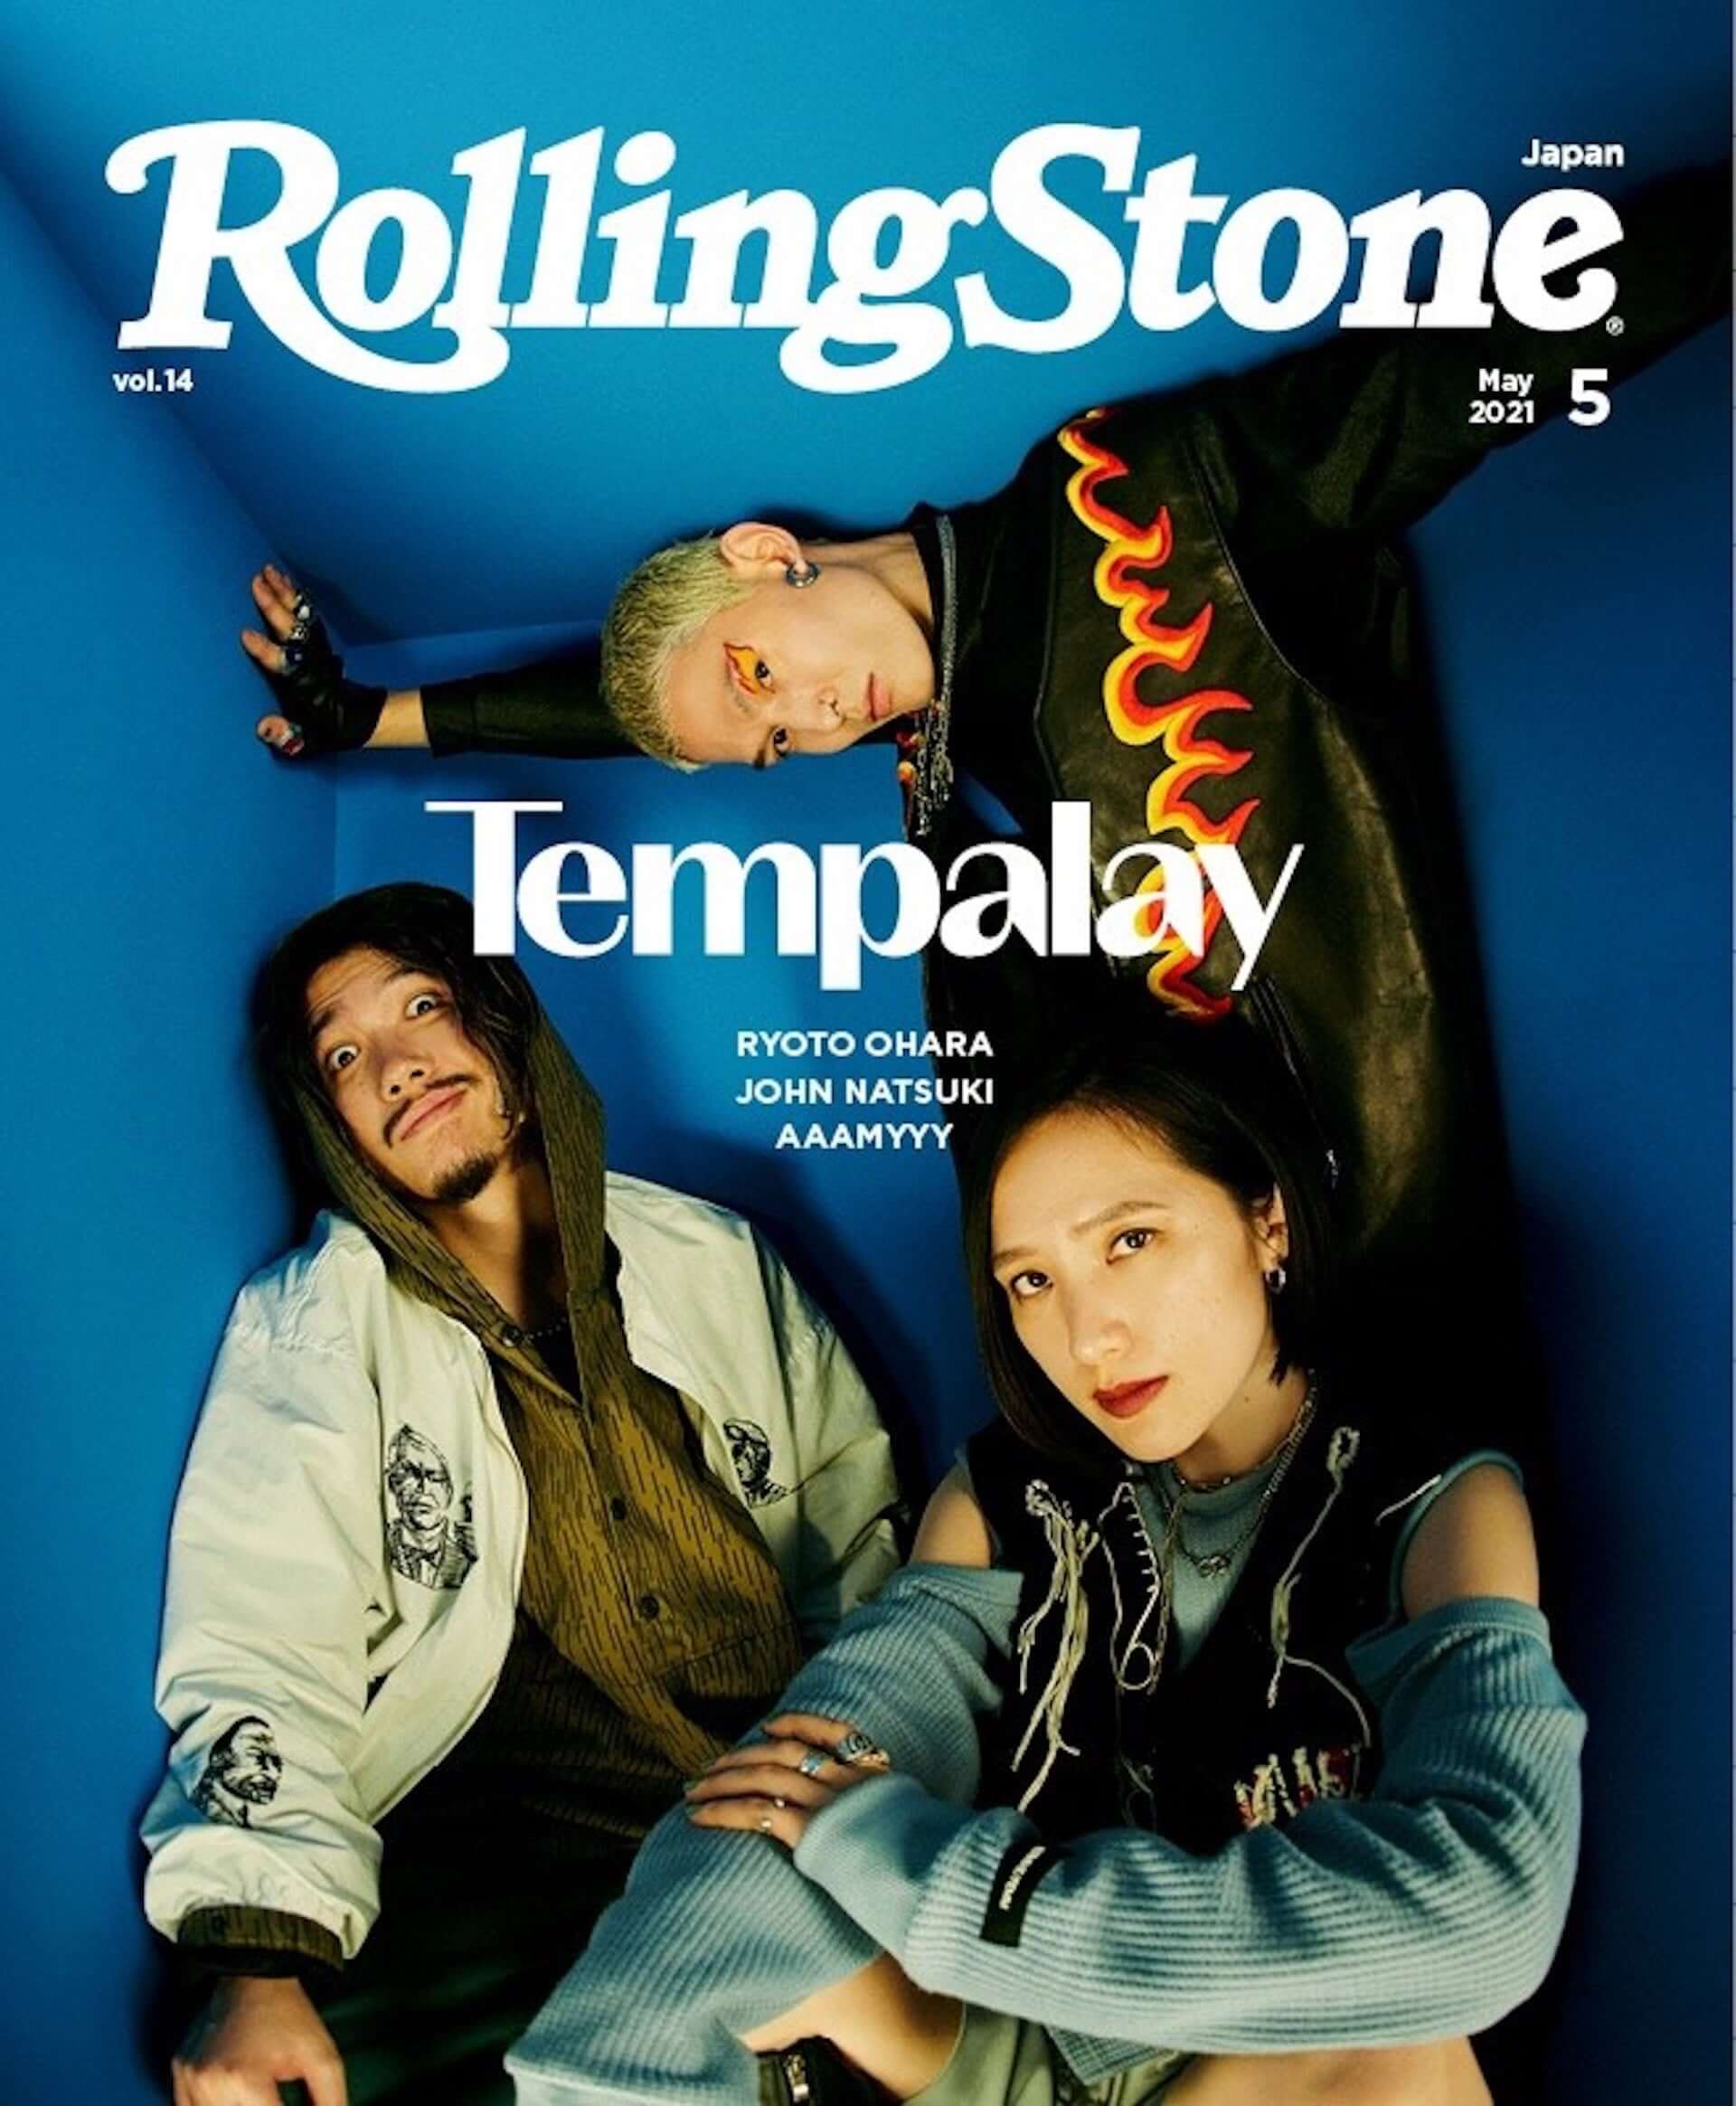 Tempalayが『Rolling Stone Japan』史上初のW表紙仕様でBACK COVERに登場！最新作『ゴーストアルバム』の制作インタビューも収録 music210322_tempalay_1-1920x2329